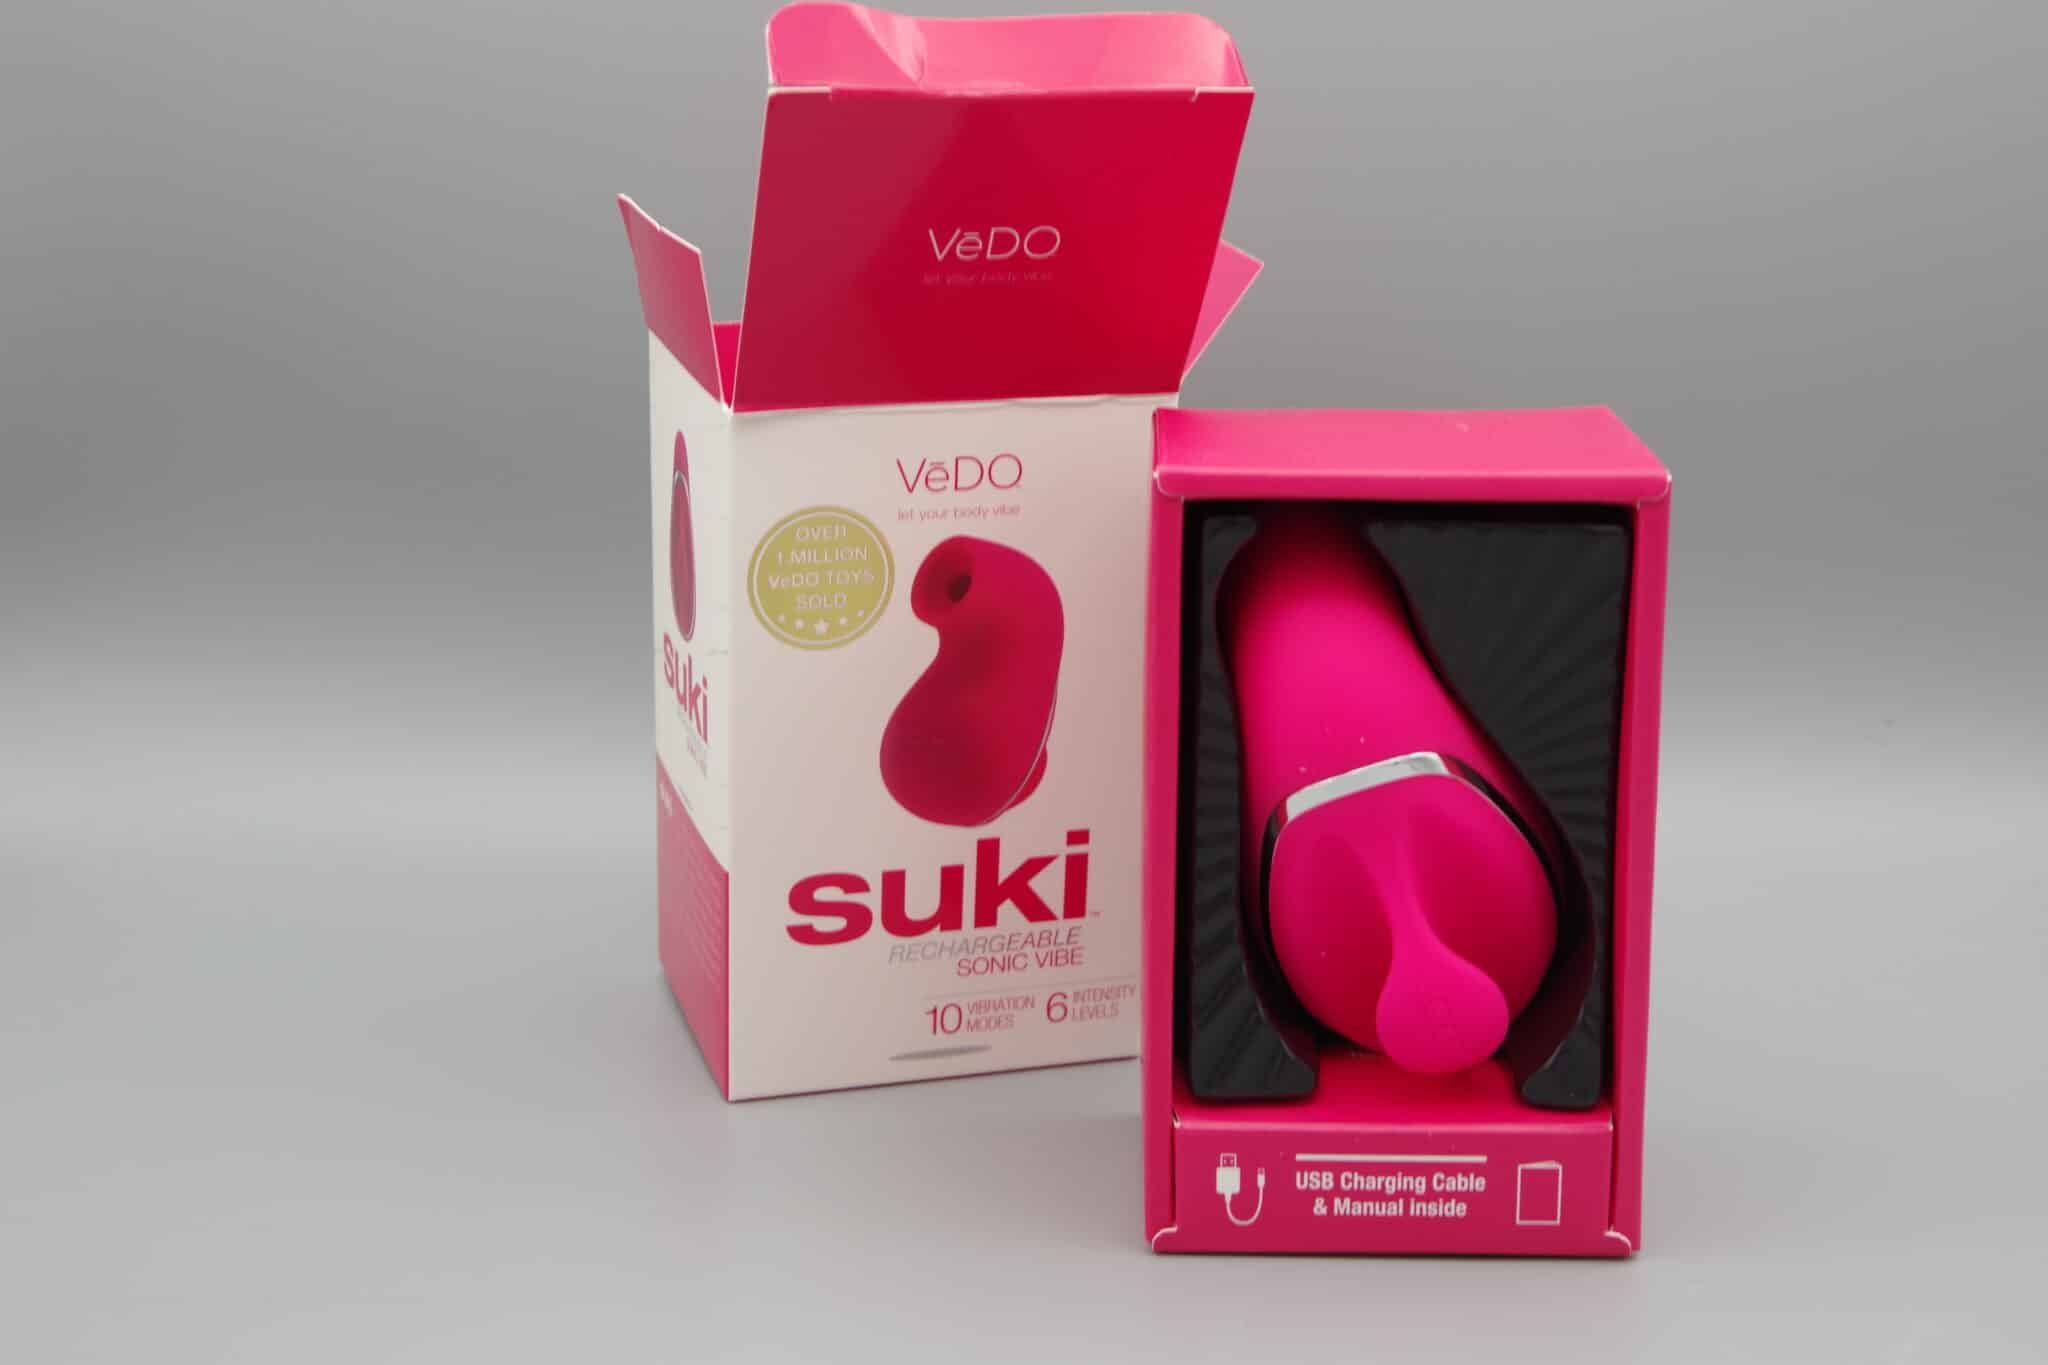 VeDO Suki The VeDO Suki: An Analysis of Packaging